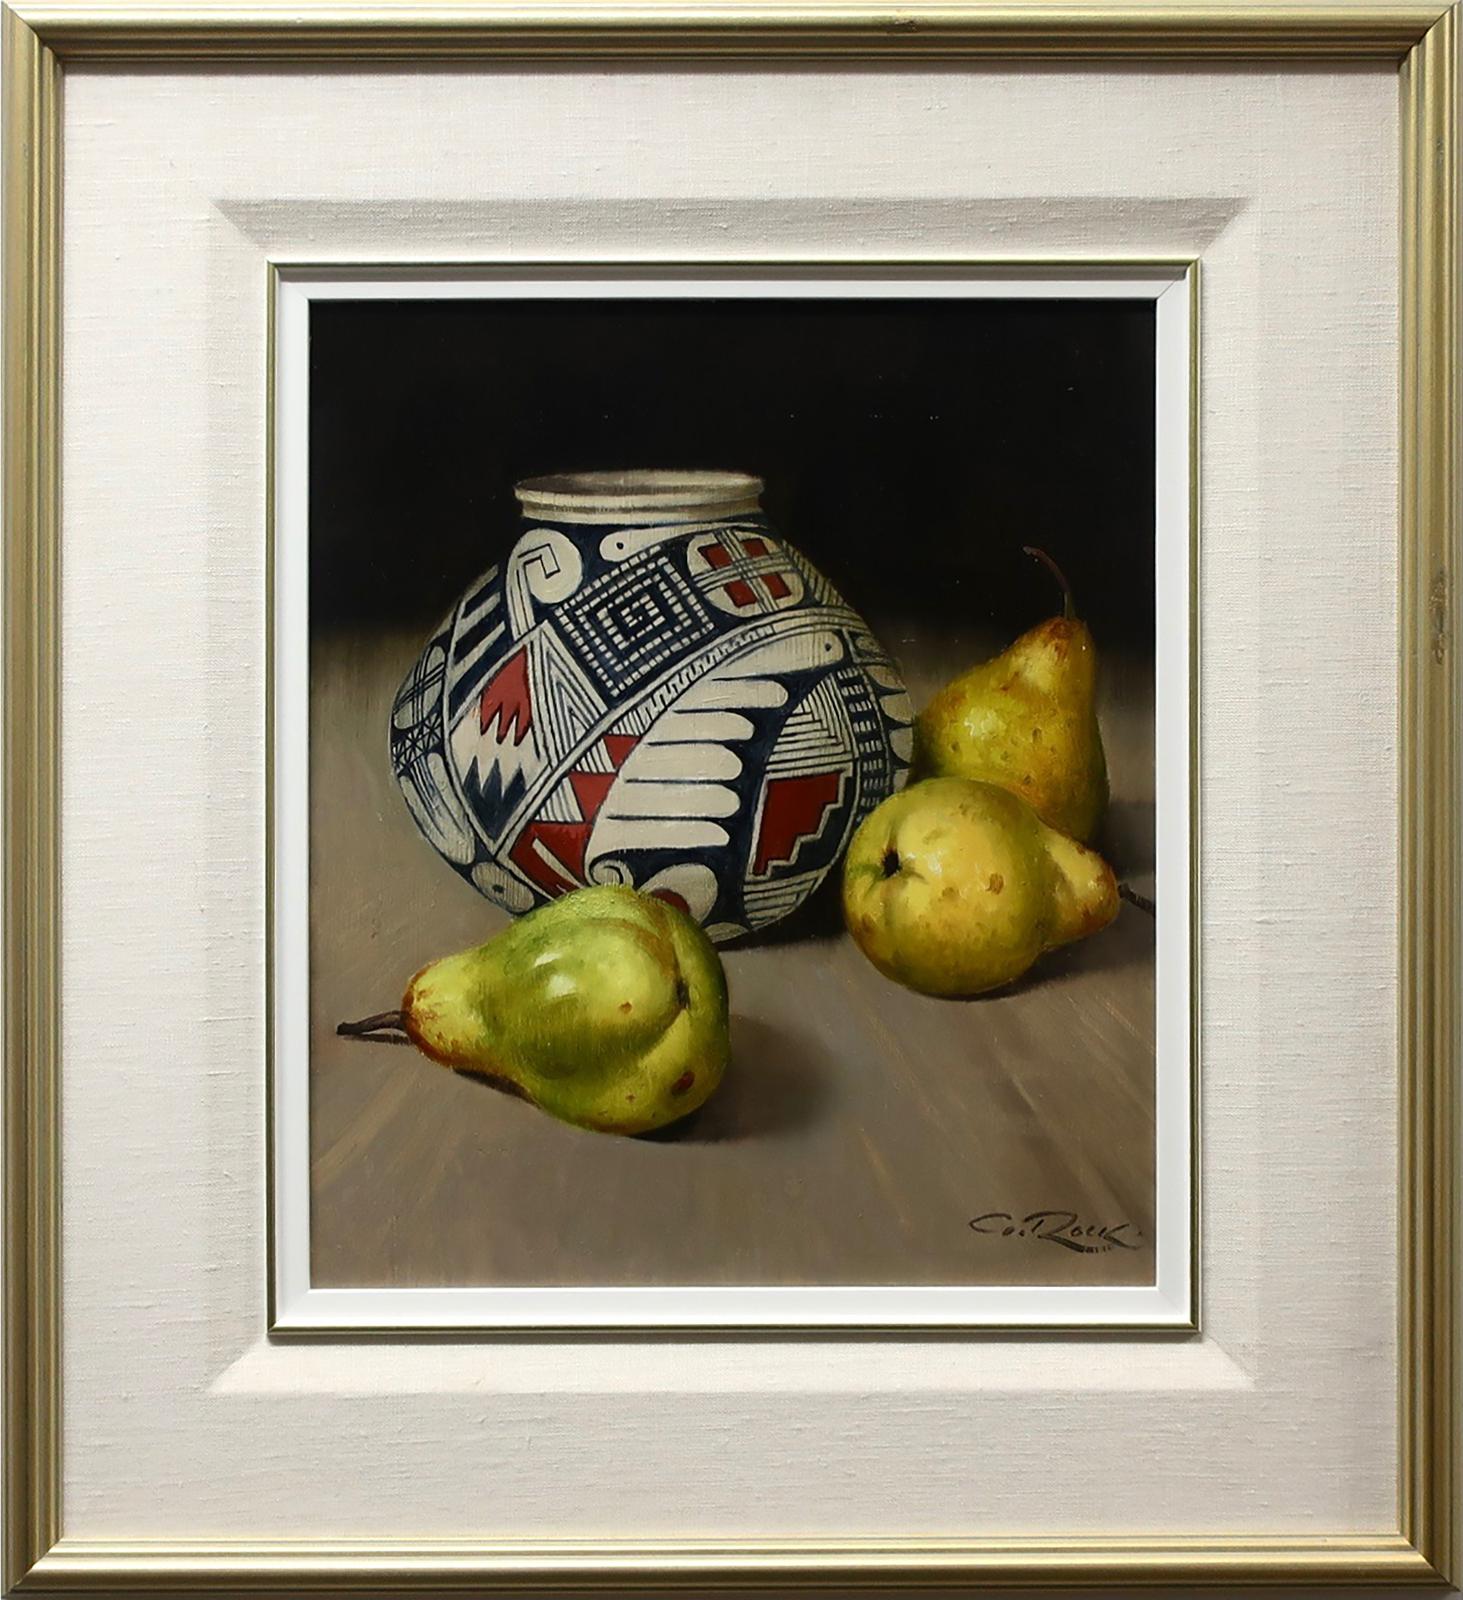 Geoffrey Allan Rock (1923-2000) - Mexican Pot With Anjou Pears